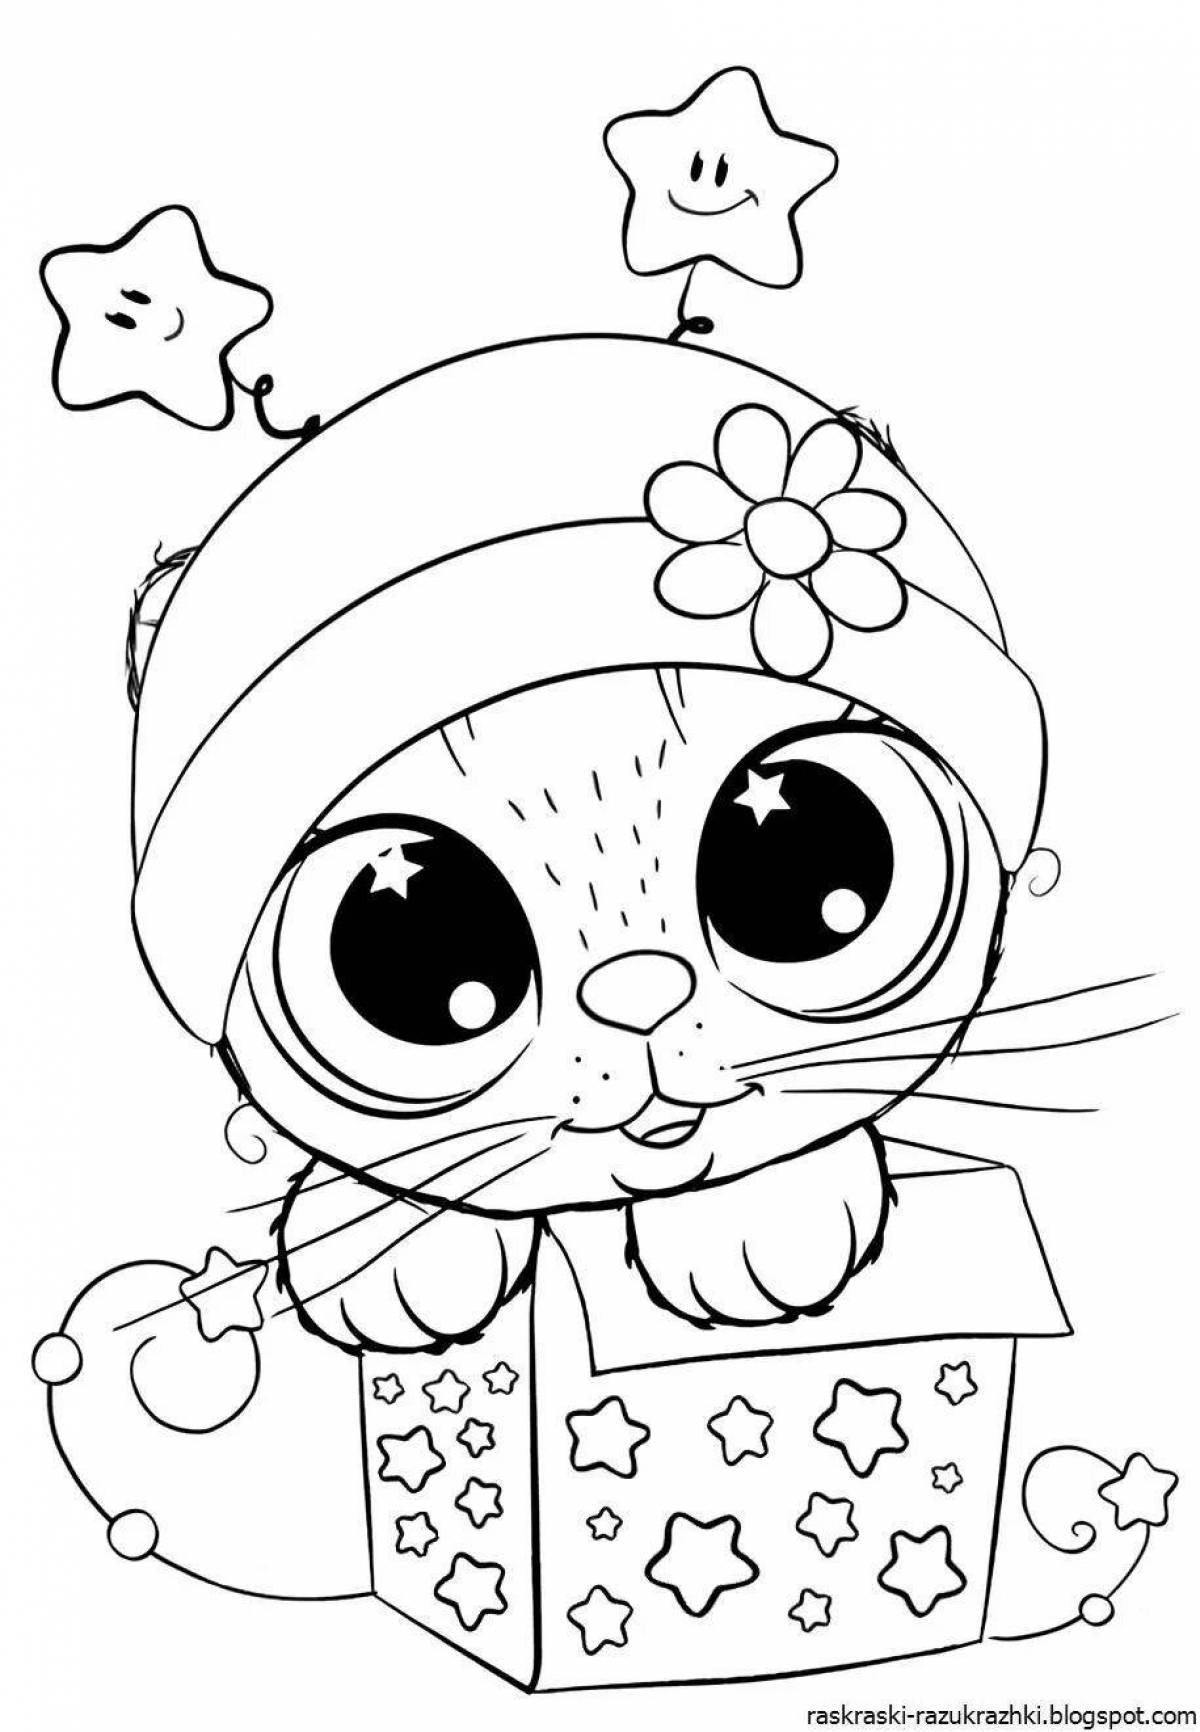 Bright cute kitten coloring book